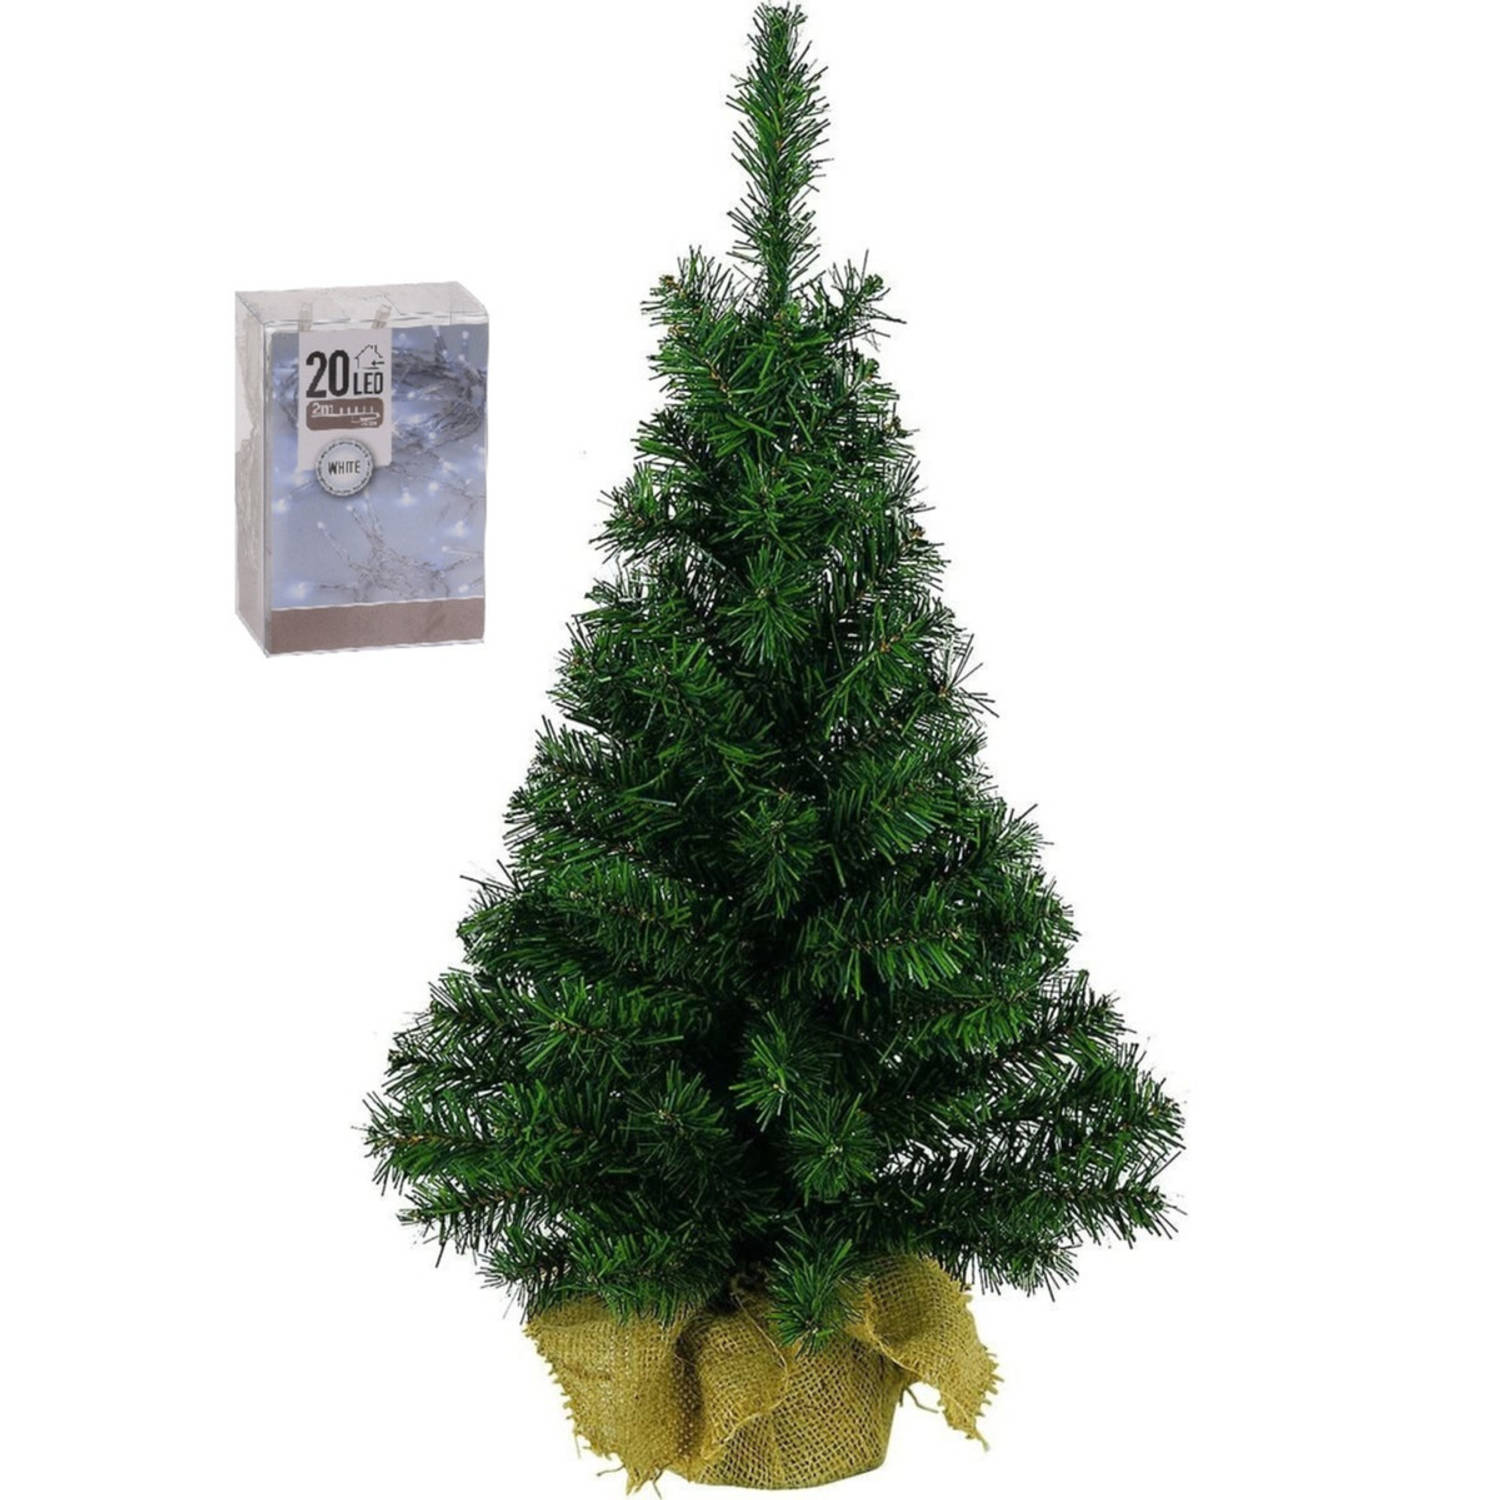 Volle kunst kerstboom 45 cm in jute zak inclusief 20 helder witte lampjes Kunstkerstboom